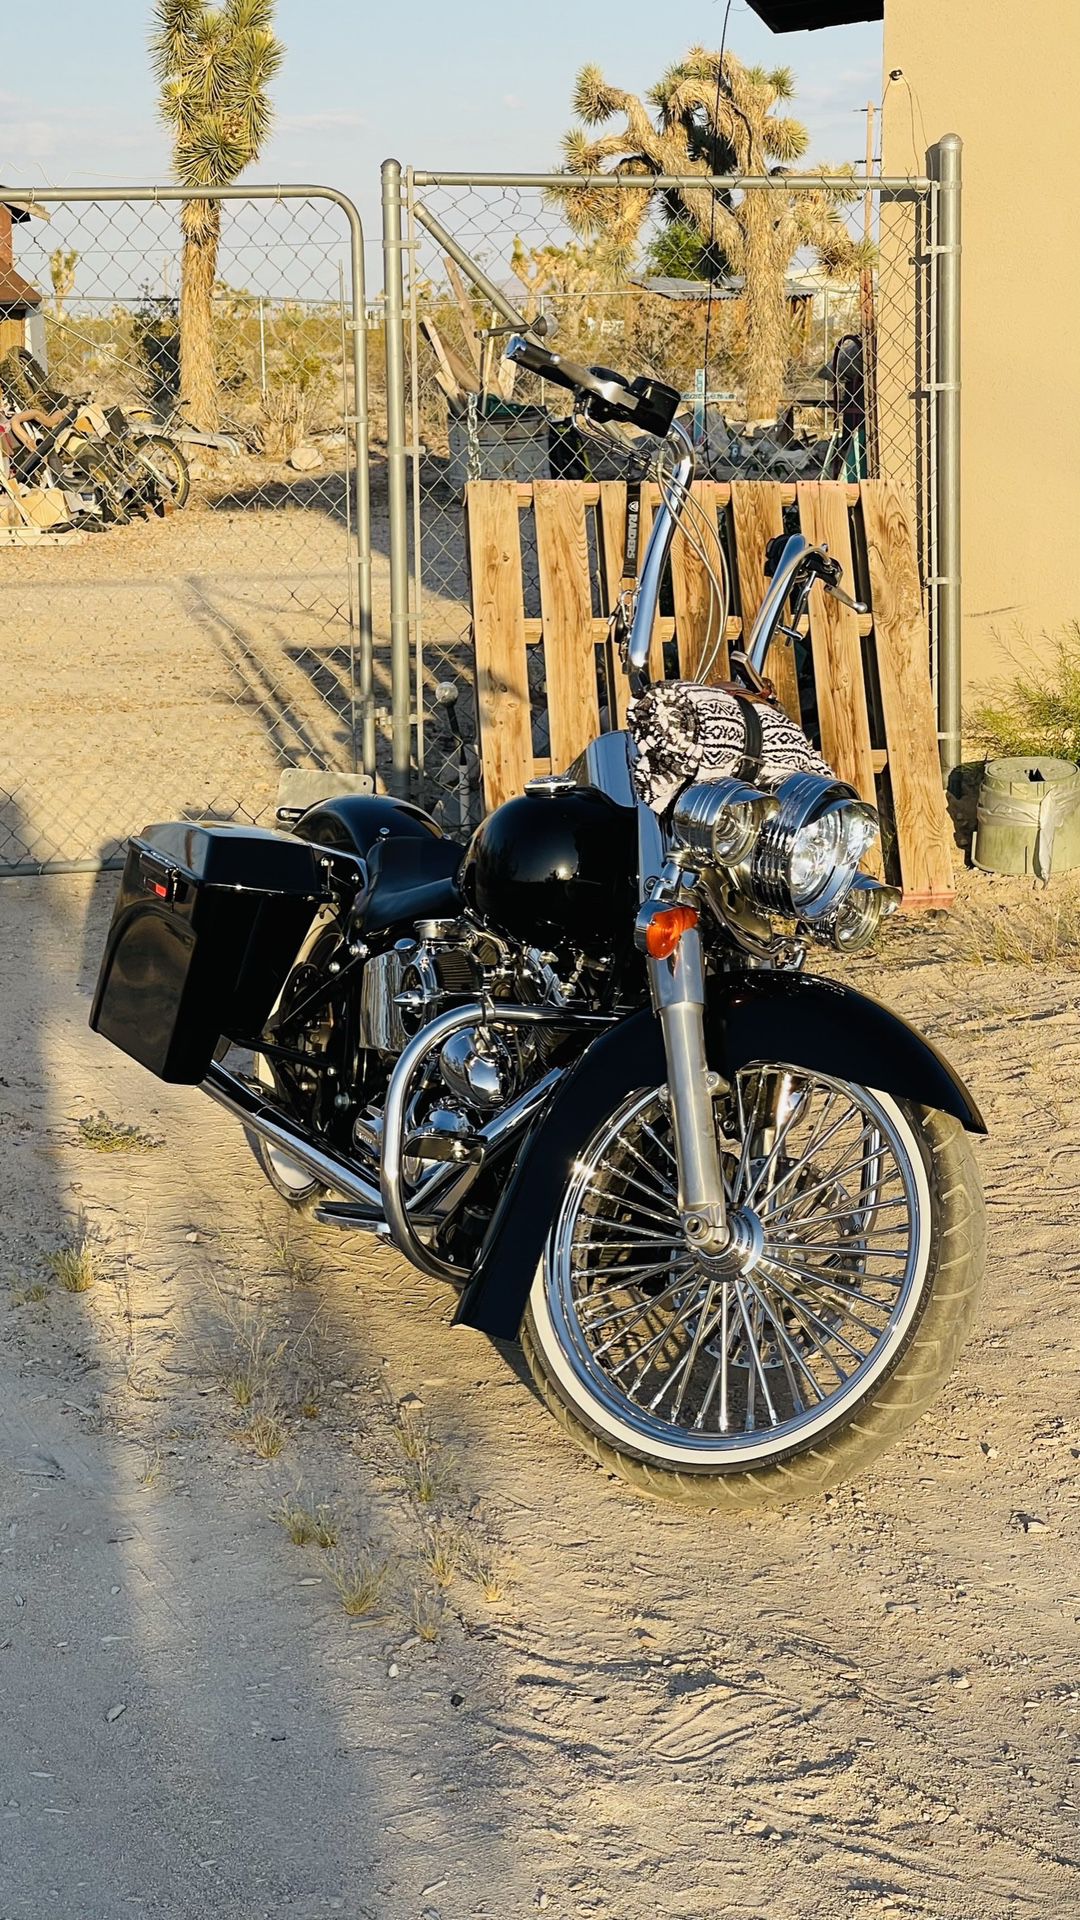 2008 Harley Davidson Heritage softail